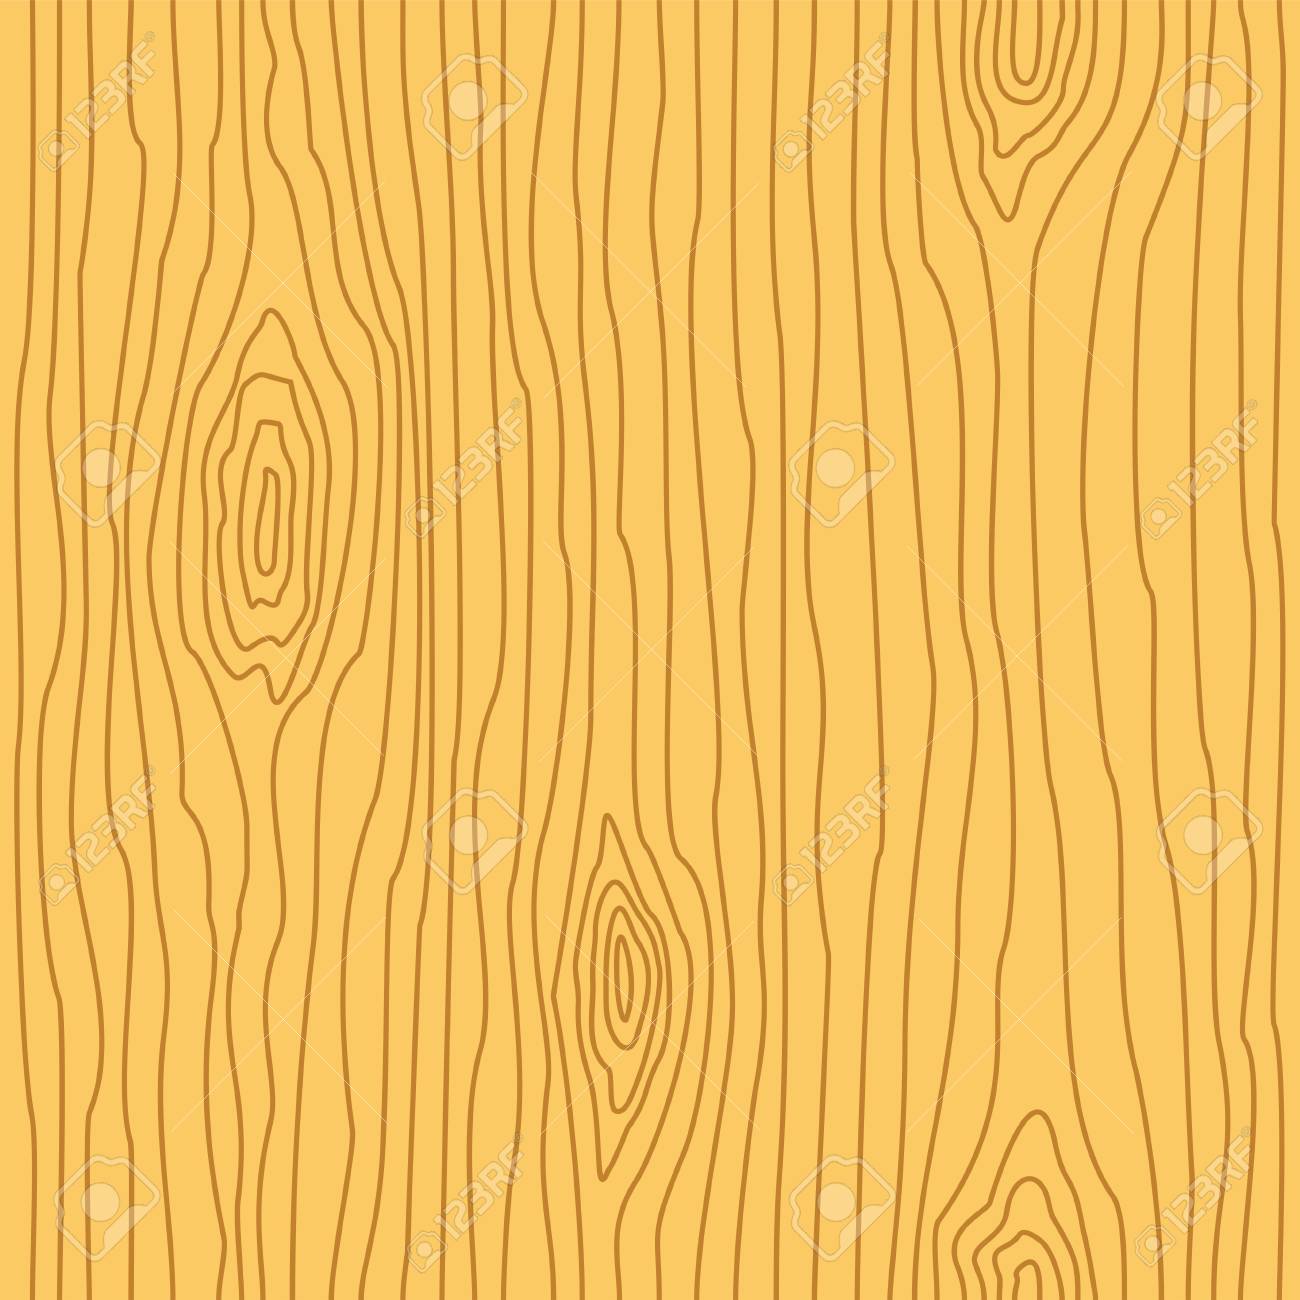 wood texture download illustrator